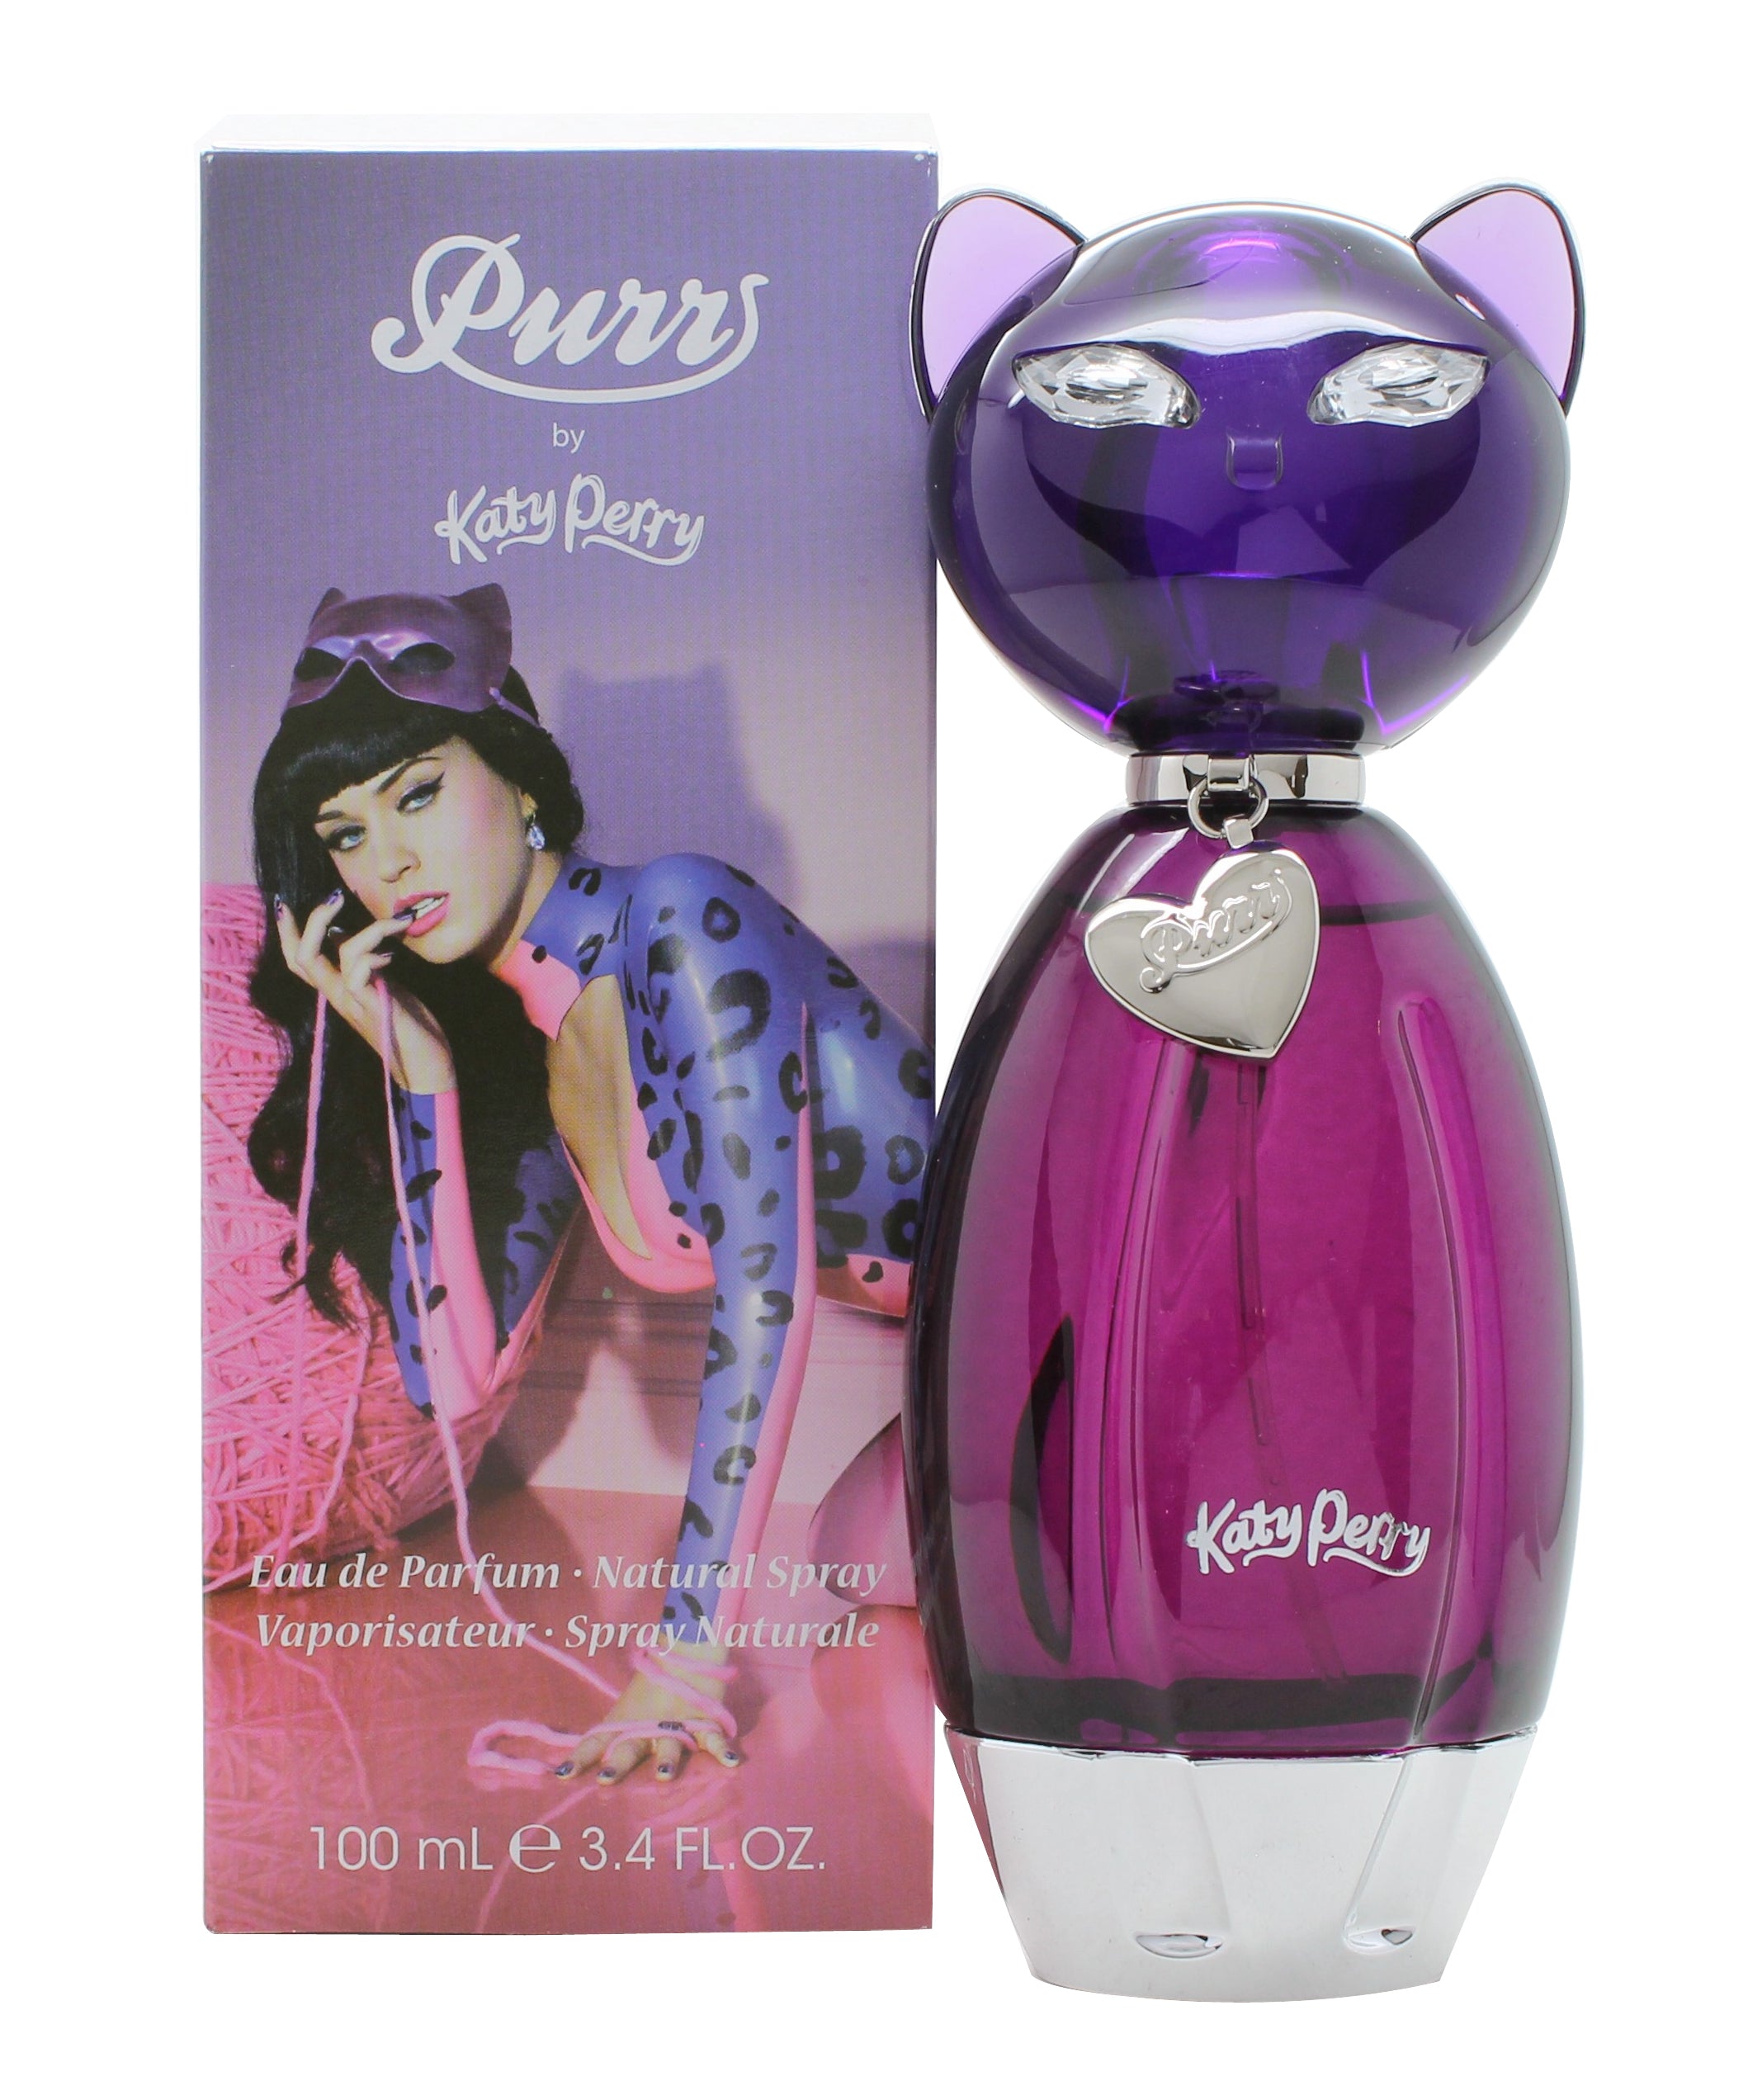 View Katy Perry Purr Eau de Parfum 100ml Spray information